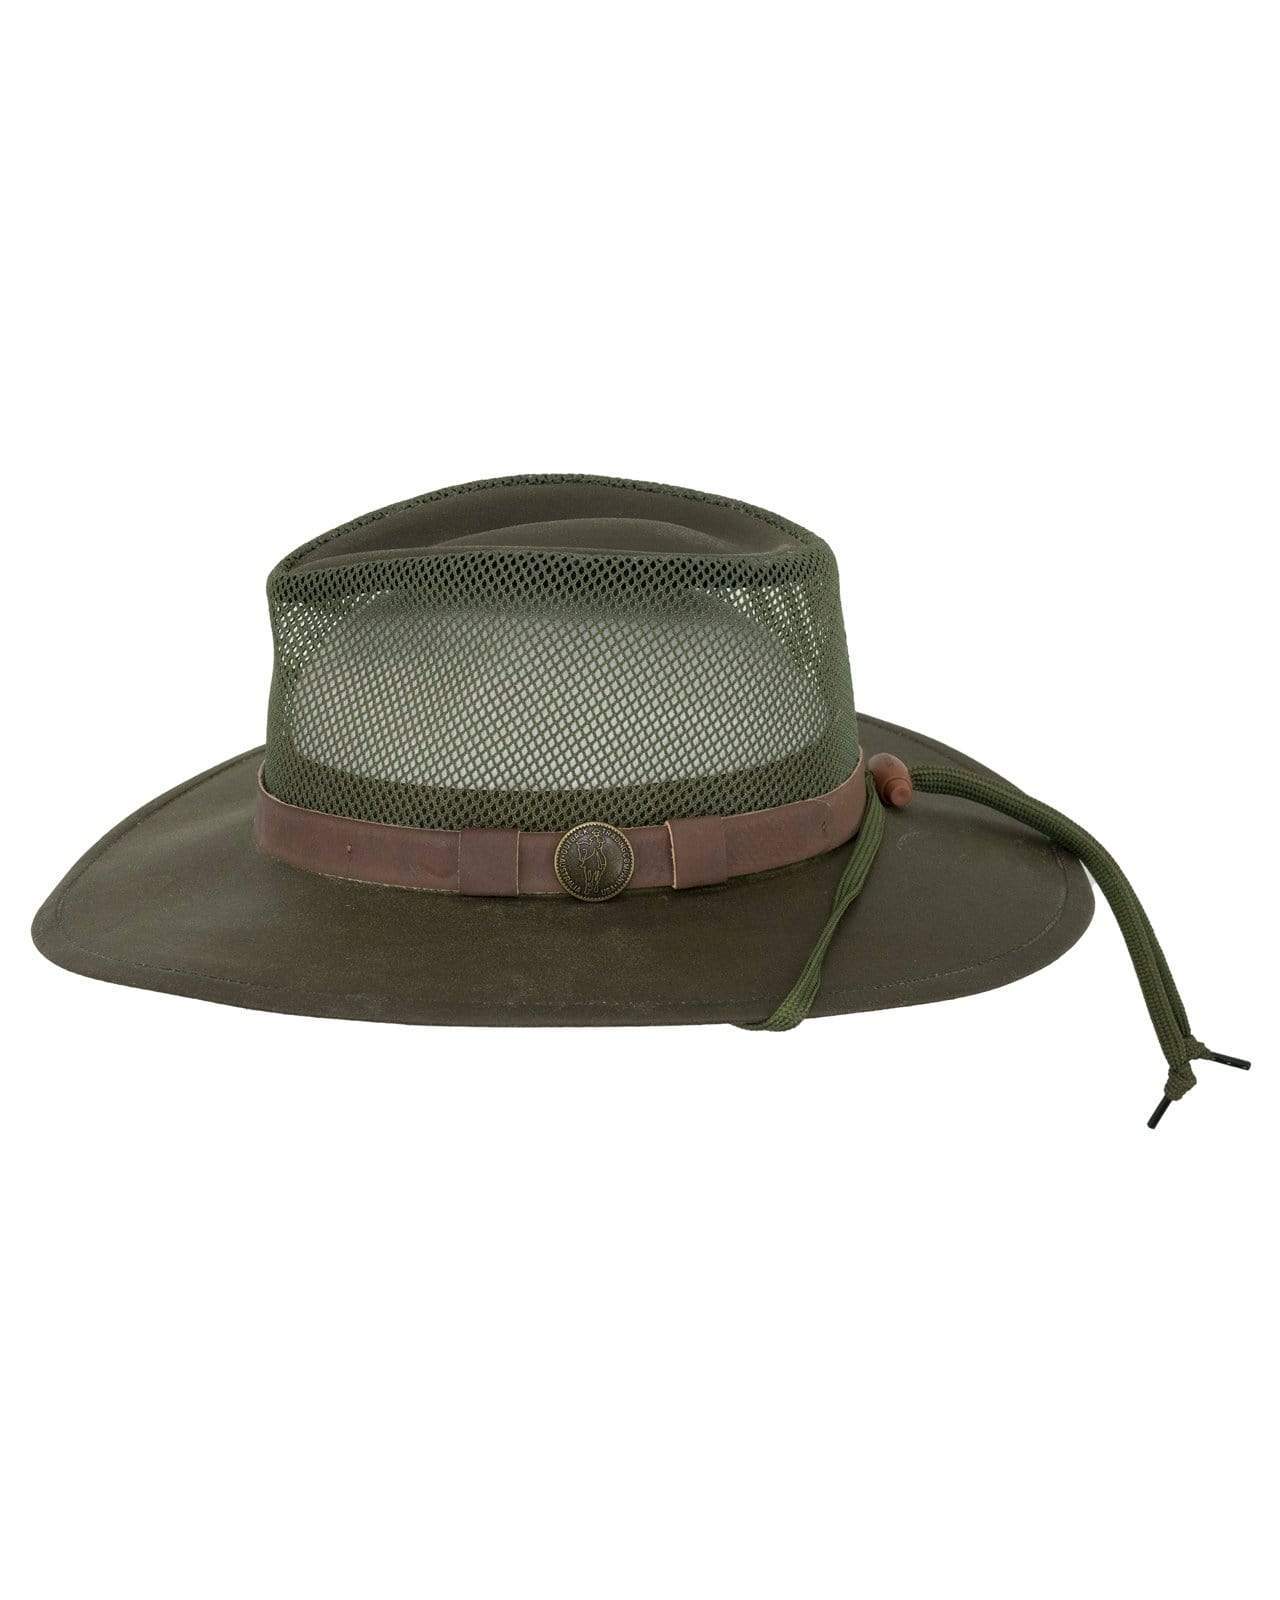 Redhead Mesh Outback Hat for Men - TrueTimber HTC Green - XL